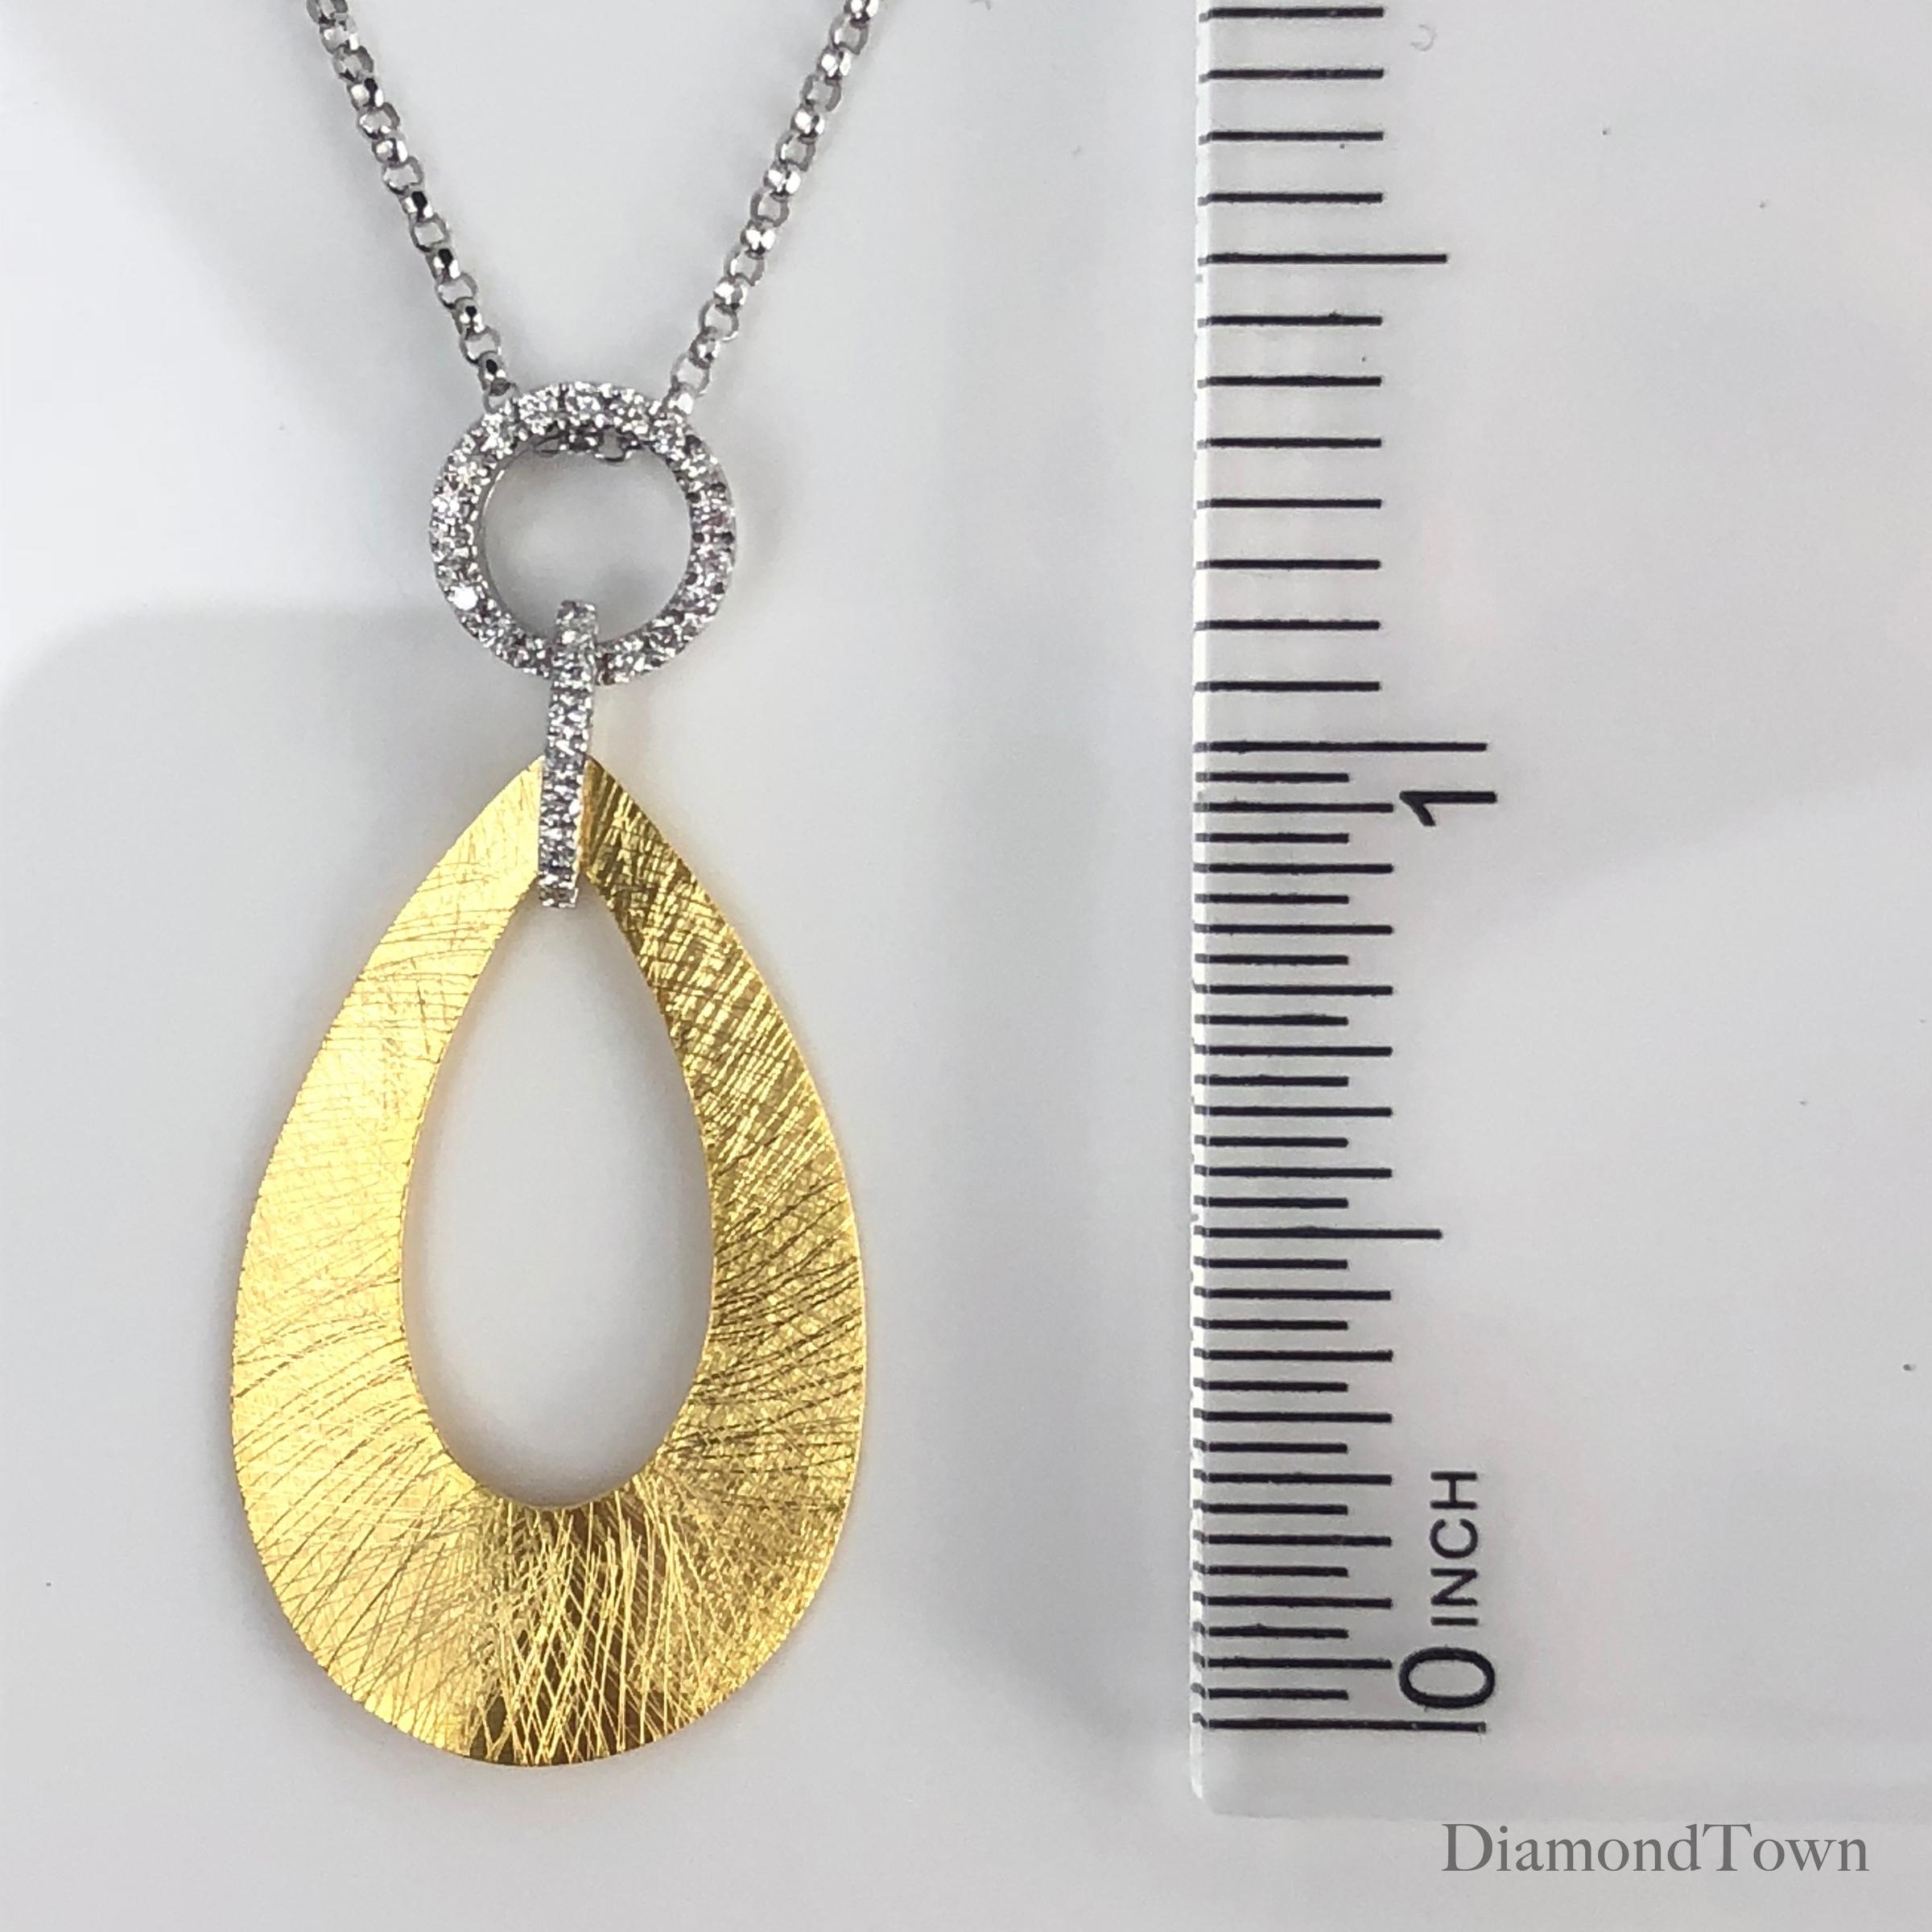 0.12 Carat Diamond Pendant in 14 Karat Yellow and White Gold by Diamond Town Damen